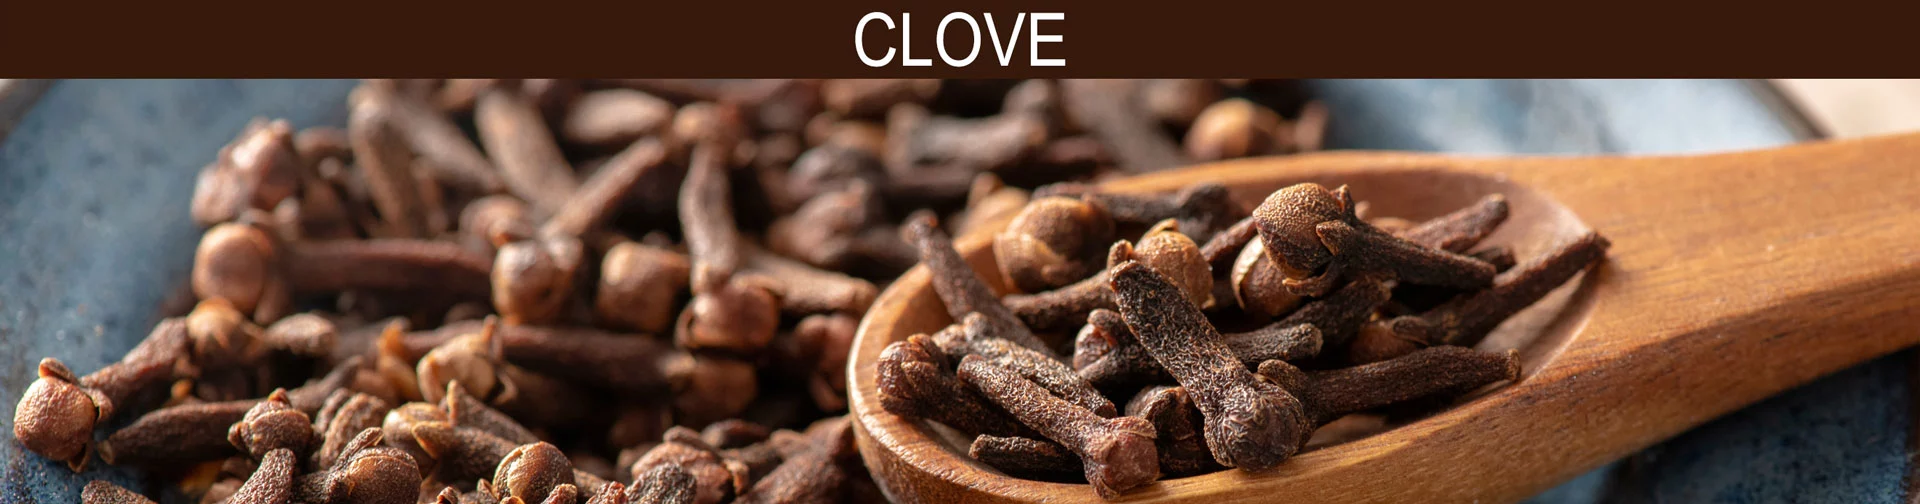 Banner image of cloves